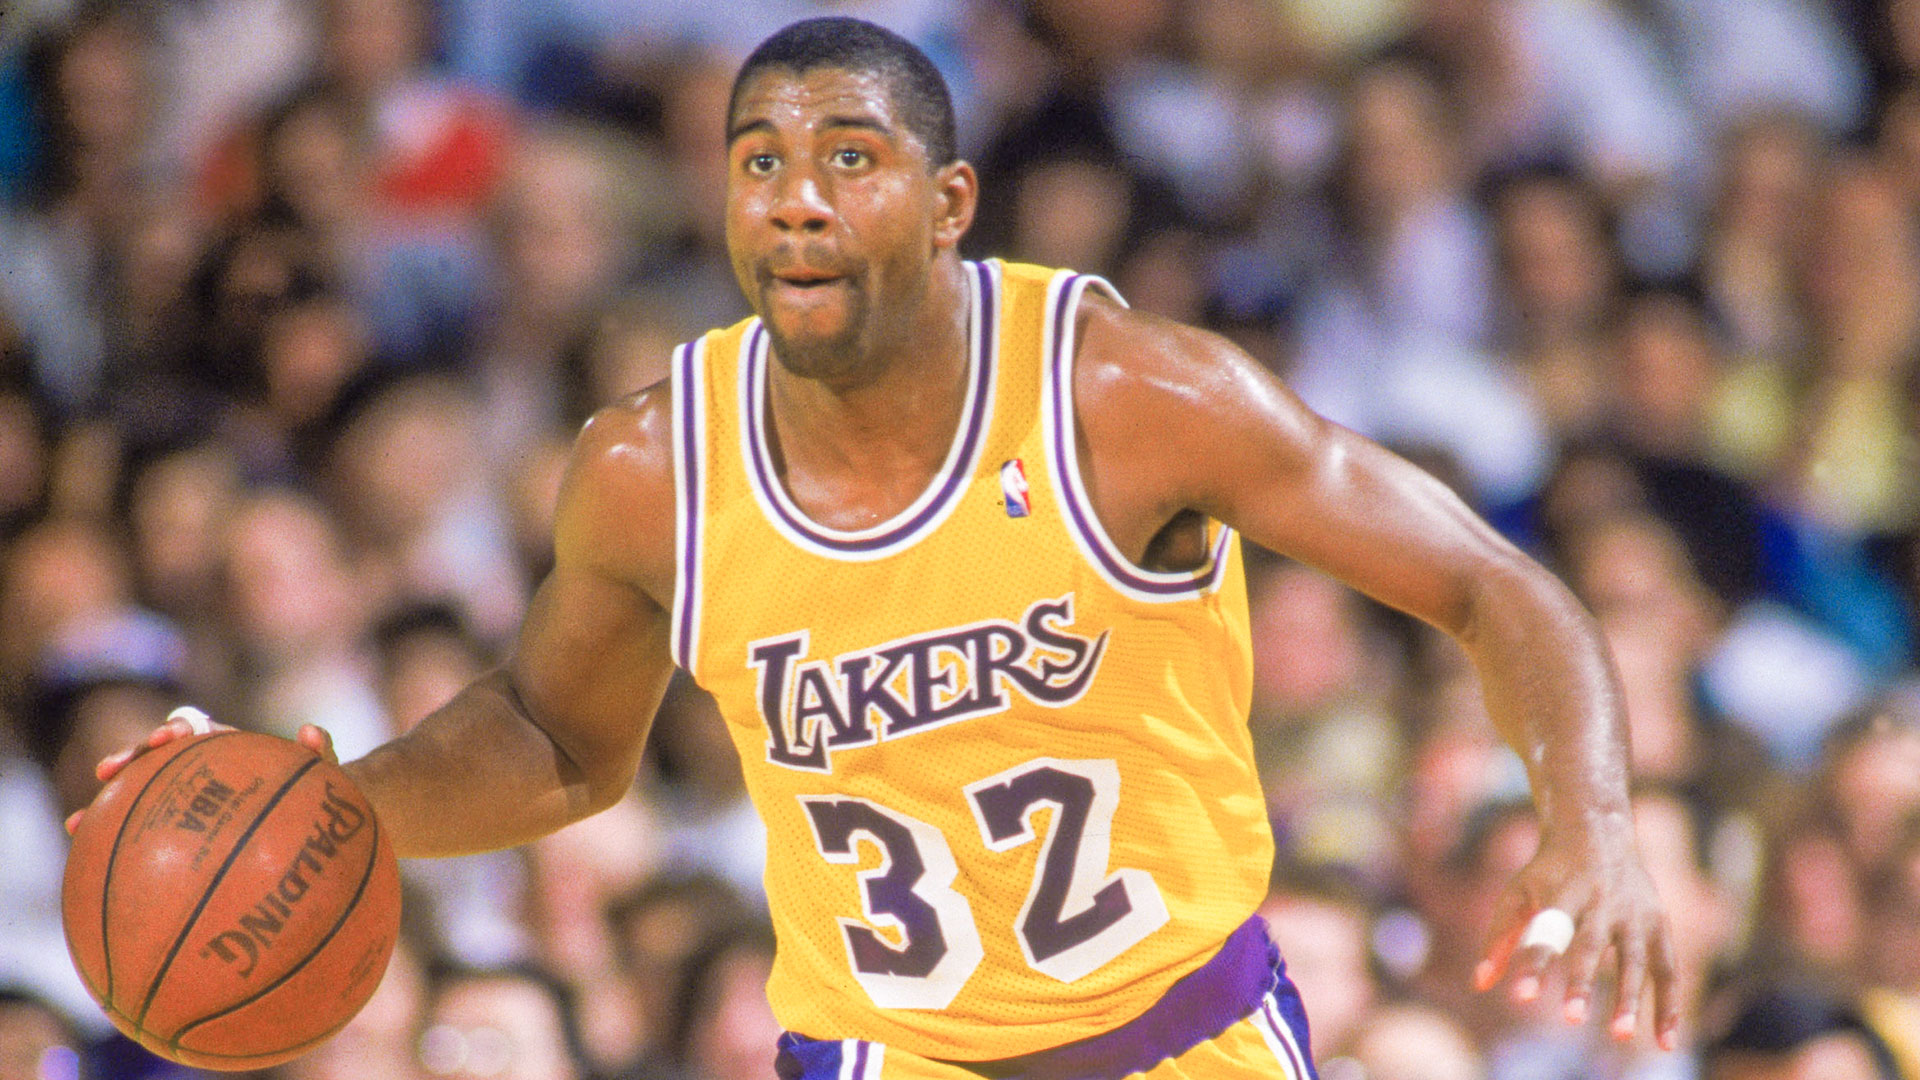 NBA Legend “Magic” Johnson to Headline ADISA’s 2018 Annual Conference